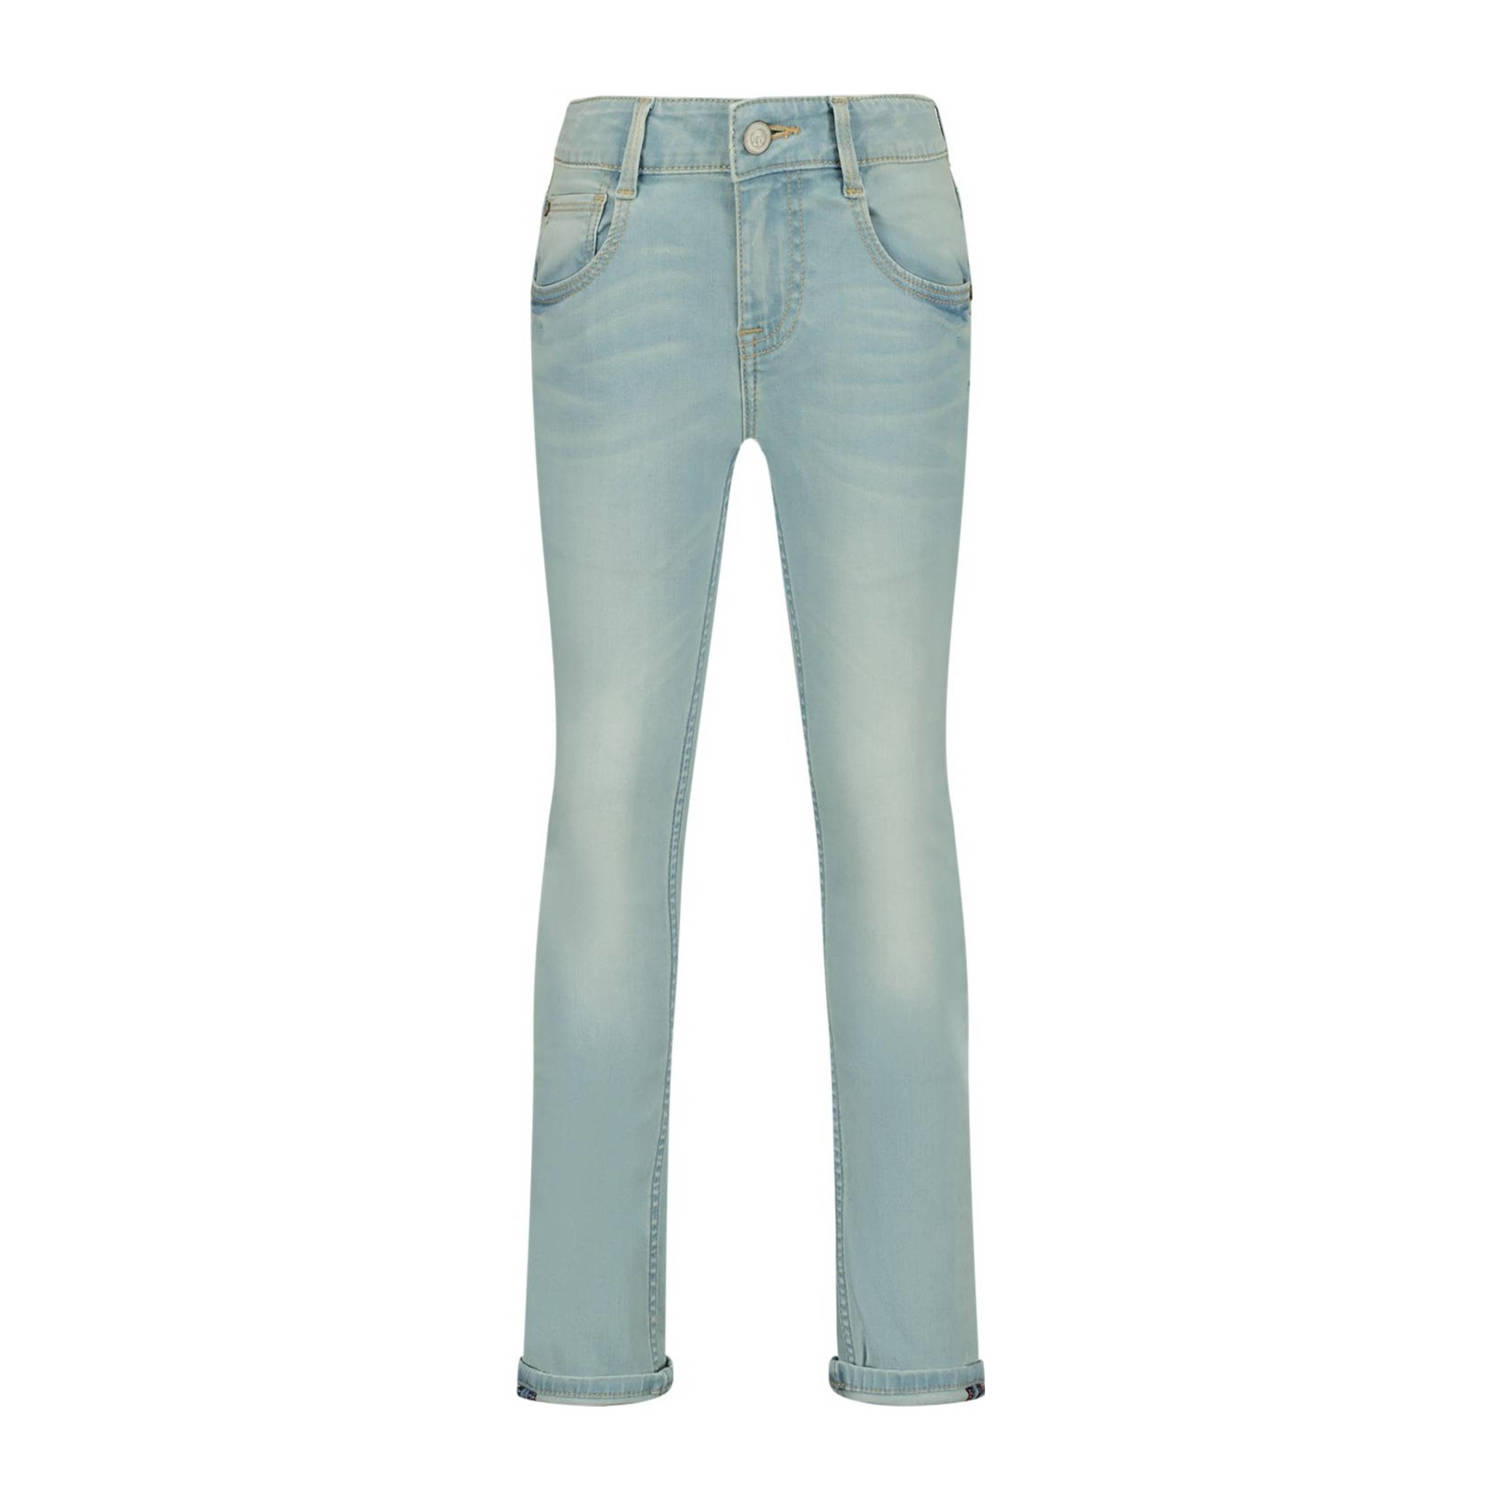 Raizzed skinny jeans Tokyo light blue stone Blauw Jongens Stretchdenim 128